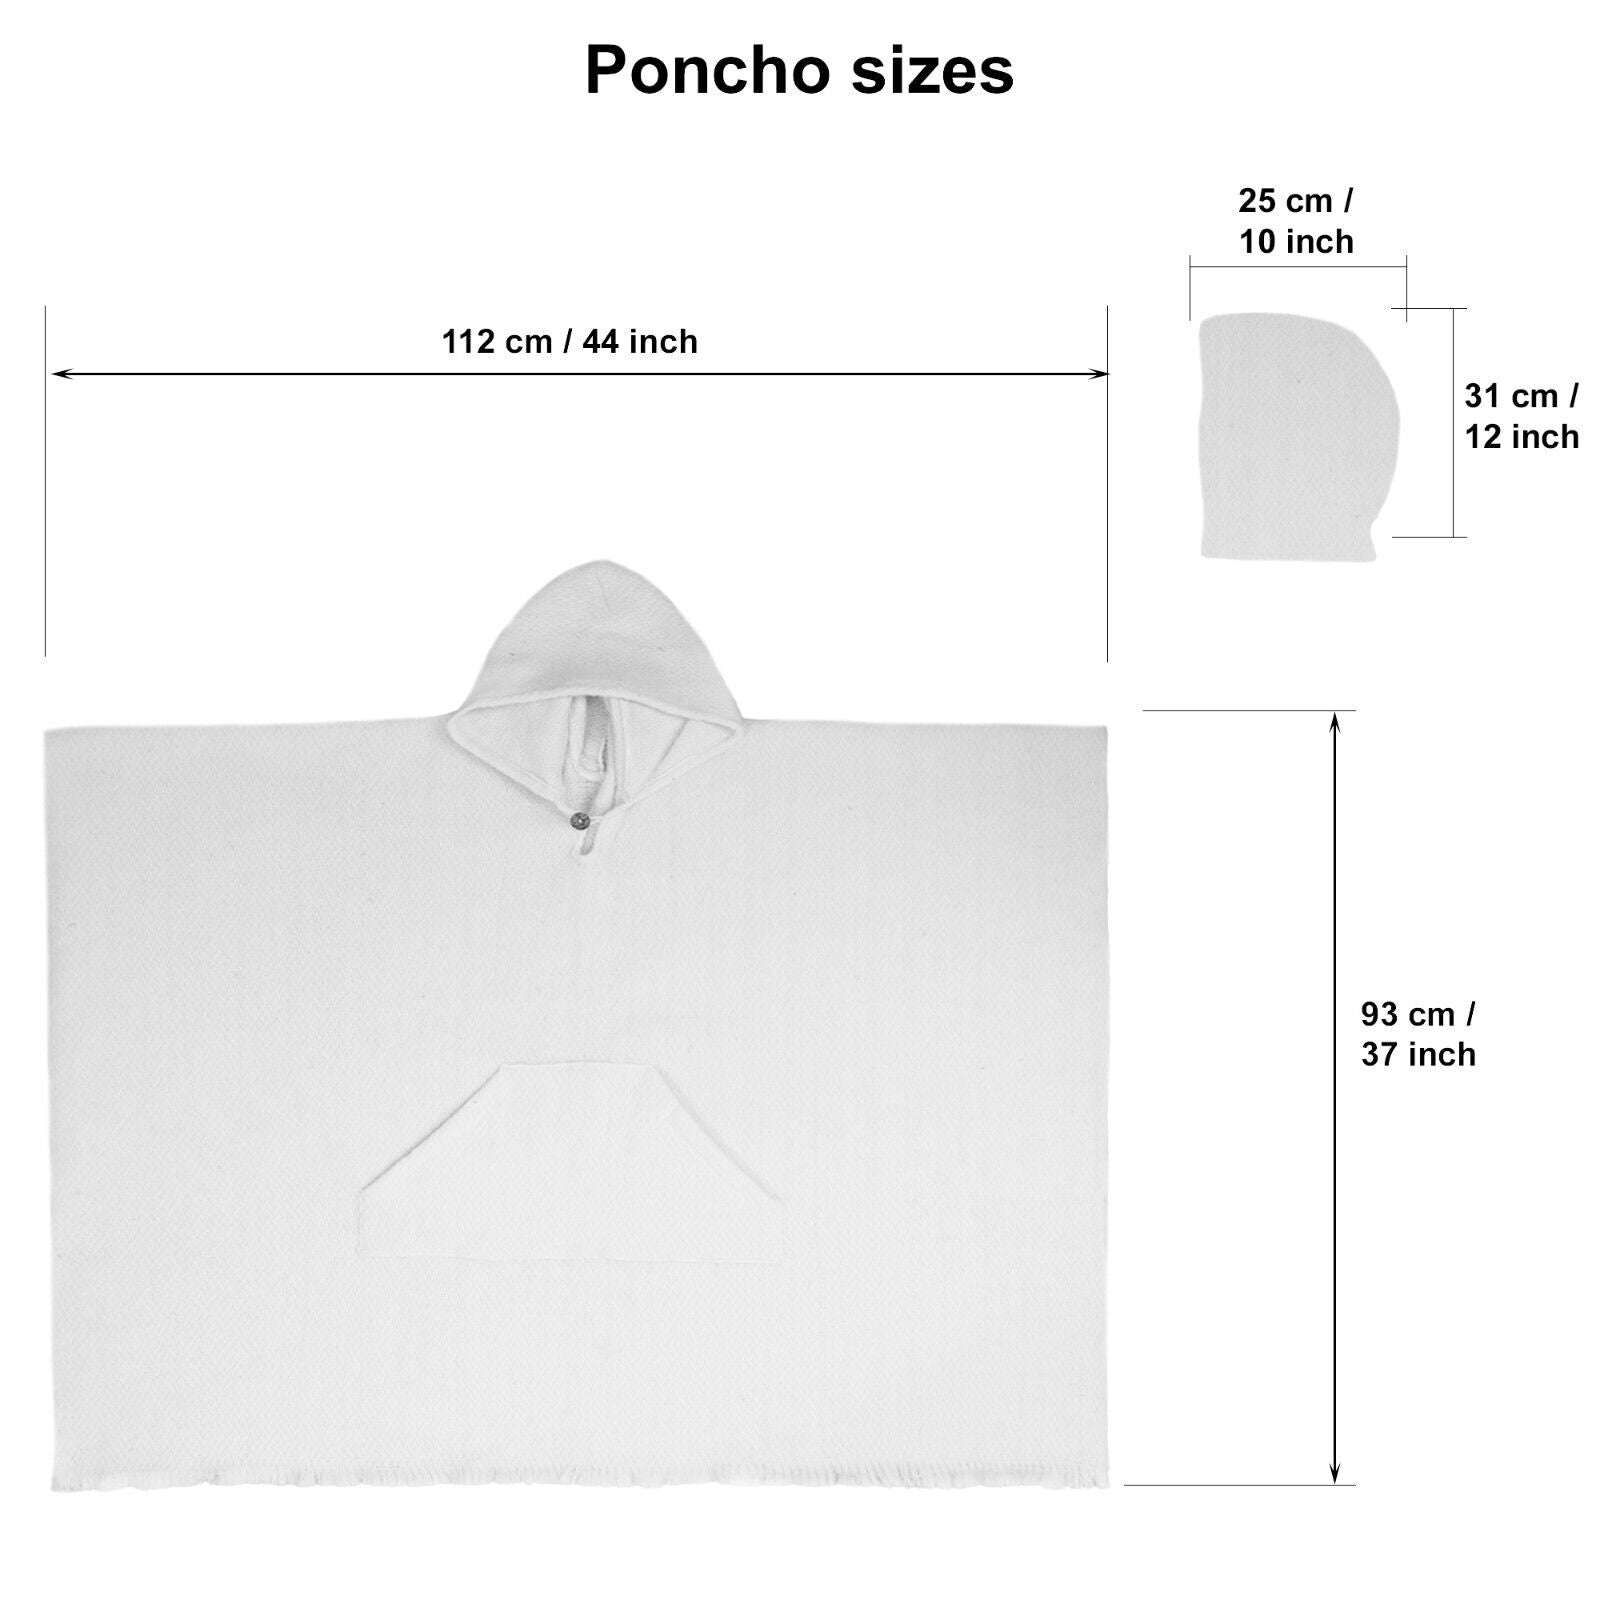 Machangara - Llama Wool Unisex South American Handwoven Hooded Poncho - solid white pattern - pocket